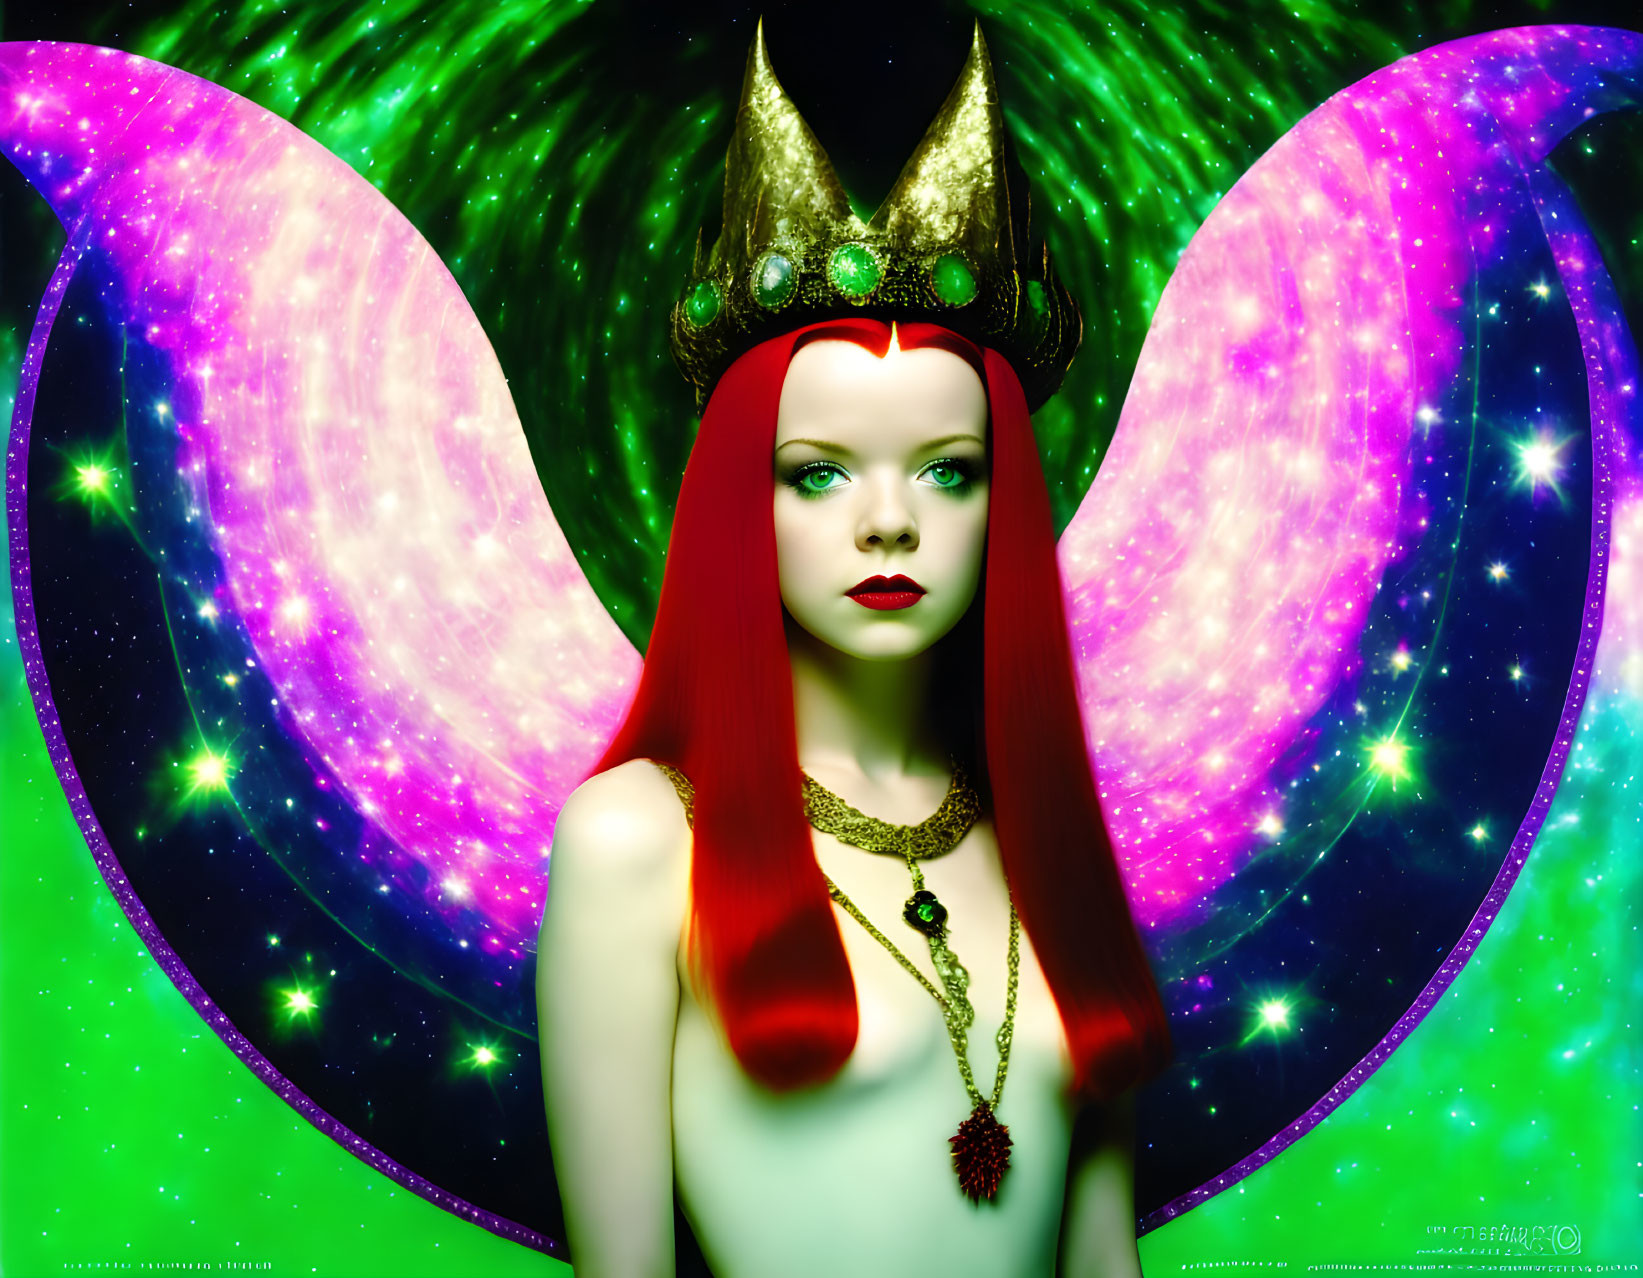 Digital Artwork: Woman with Red Hair, Crown, Purple Wings, Galactic Background